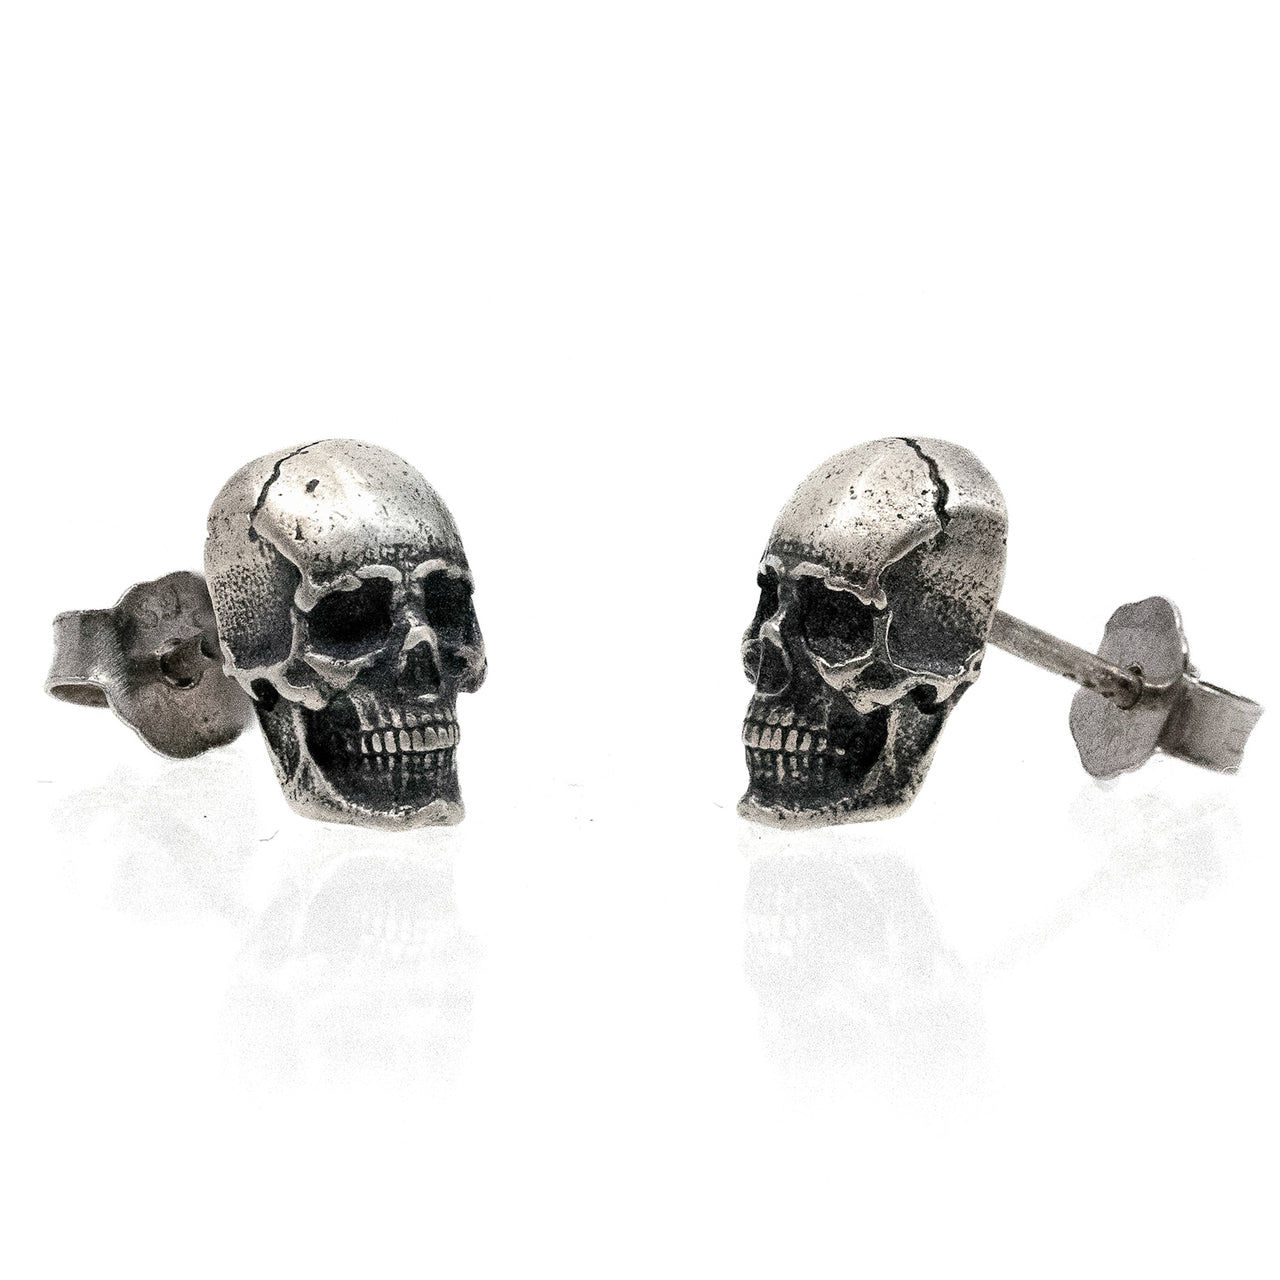 Skull Stud Earrings - Sterling Silver - Gothic Earrings